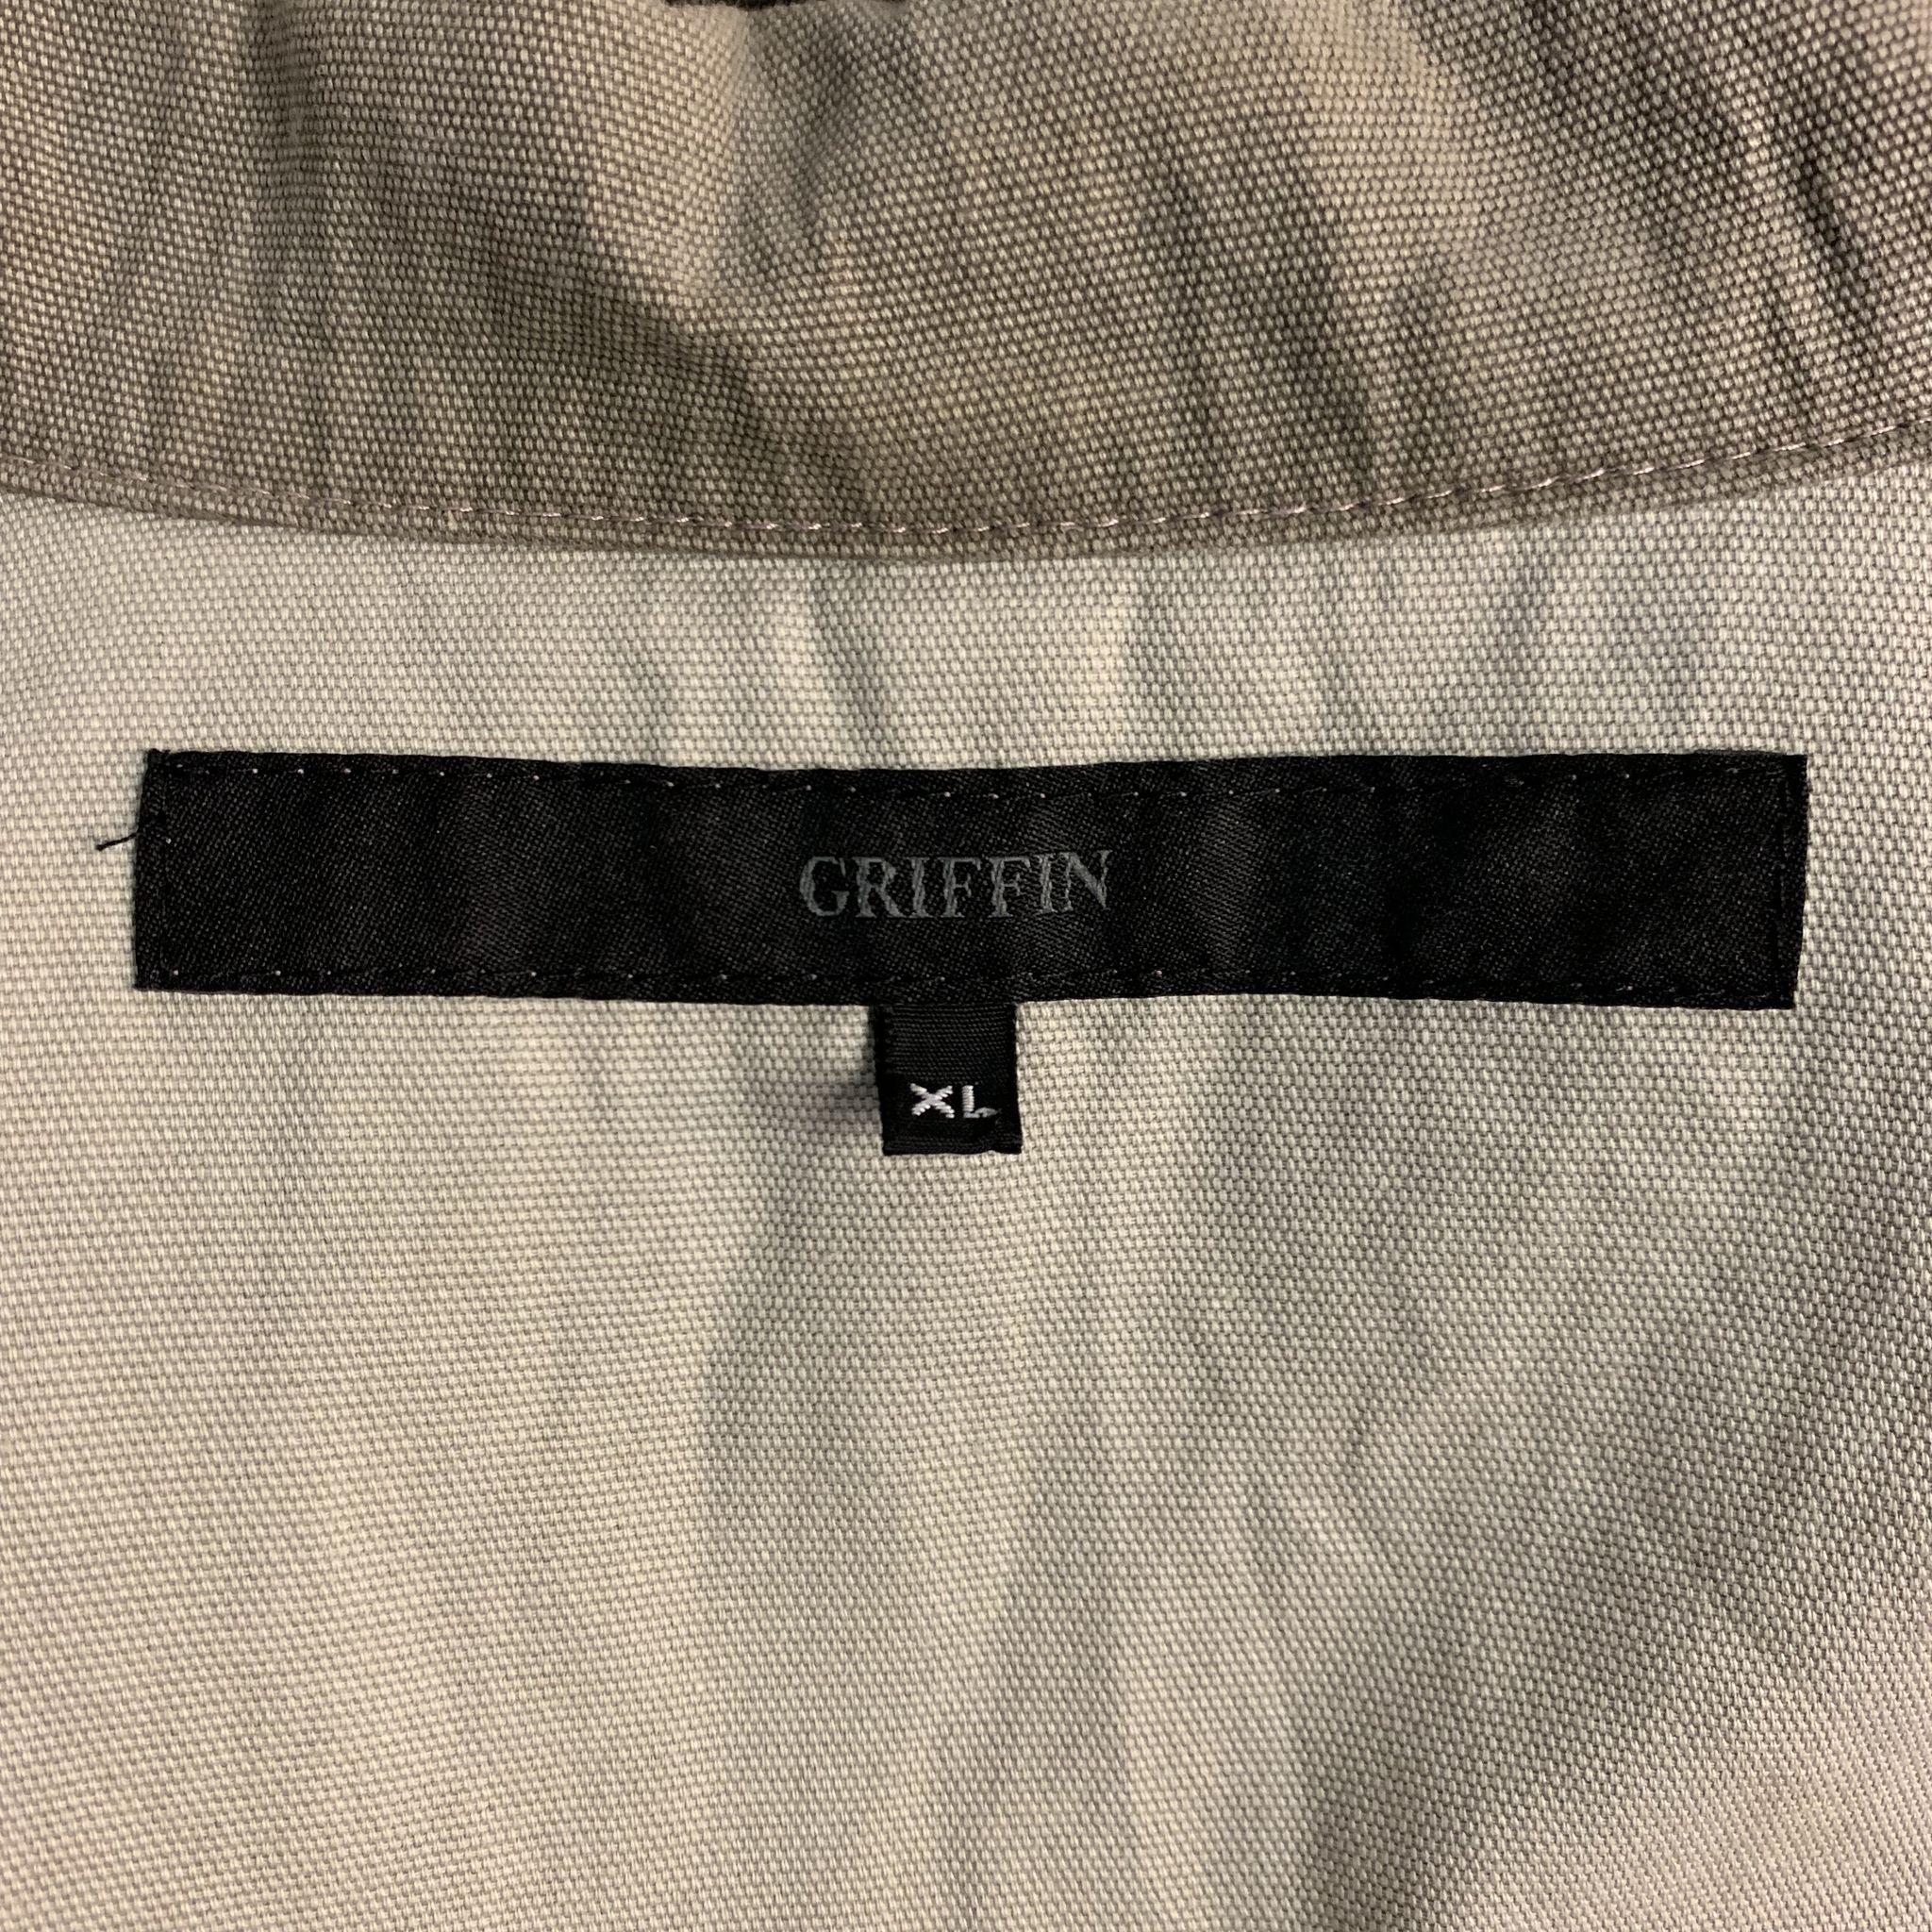 GRIFFIN XL Khaki Mixed Fabrics Cotton Hidden Buttons Jacket 4